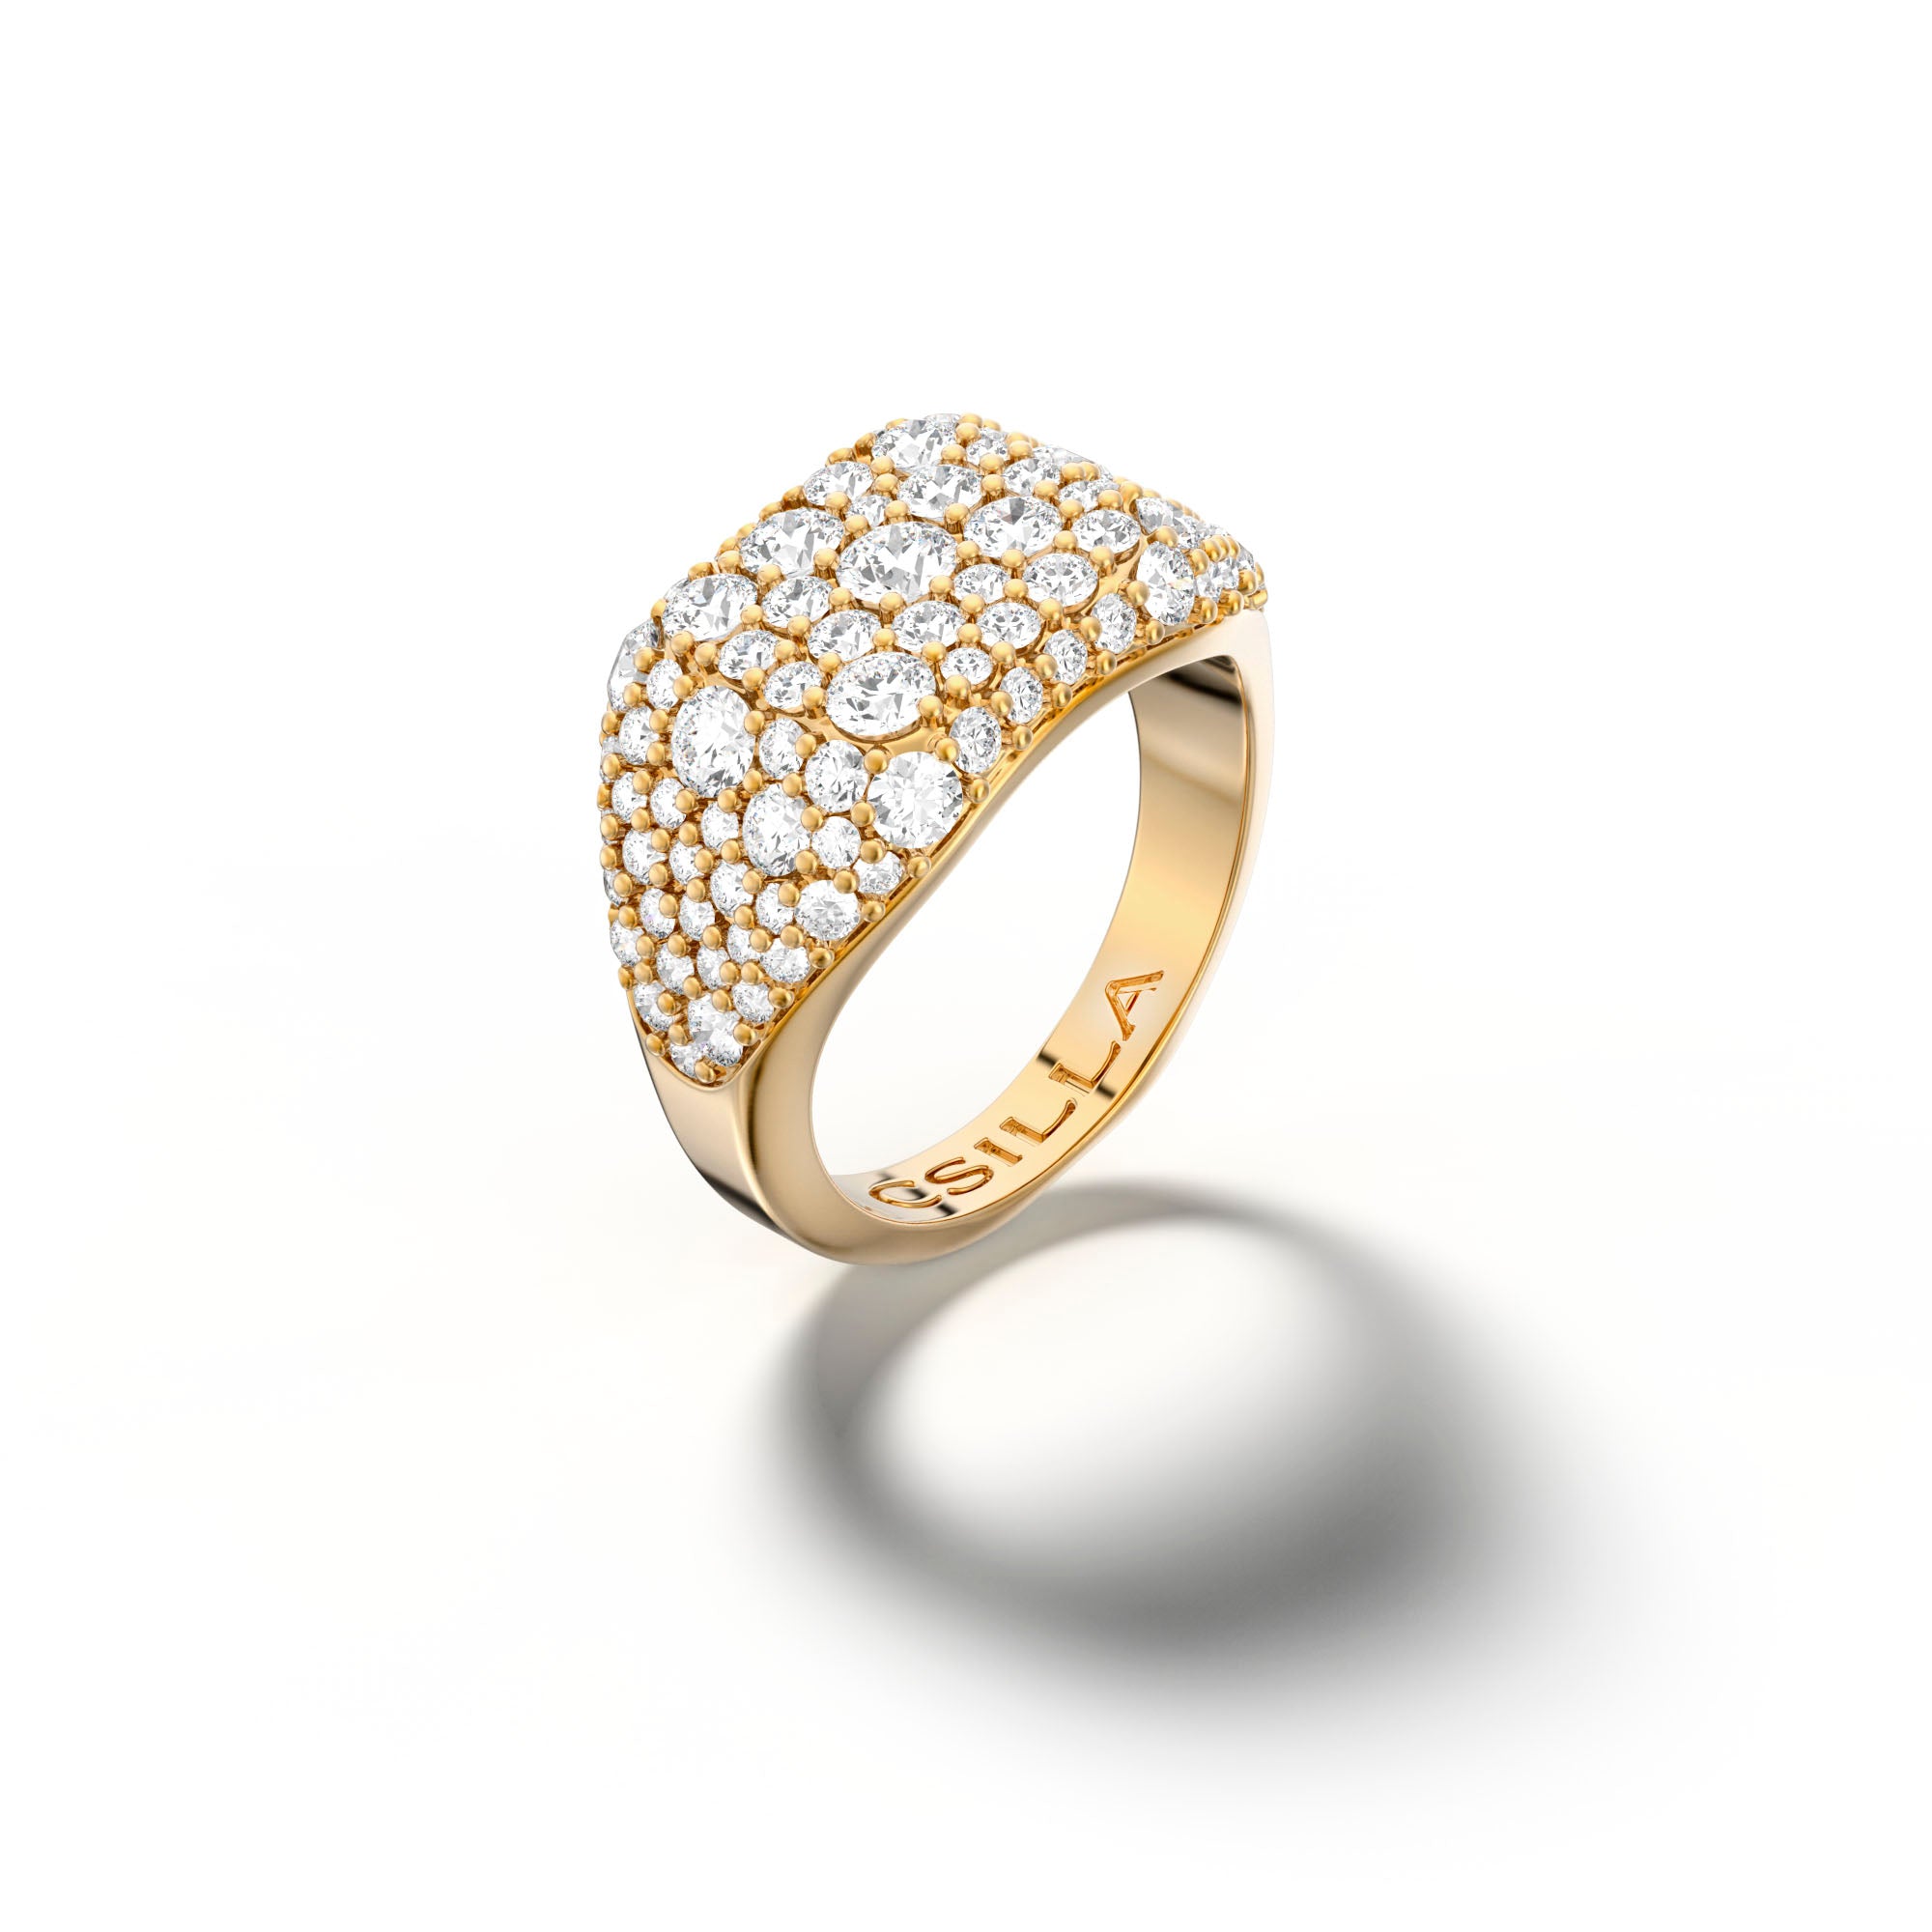 Casio Royale - White Gold With Diamonds Pinky Ring - Csilla Jewelry